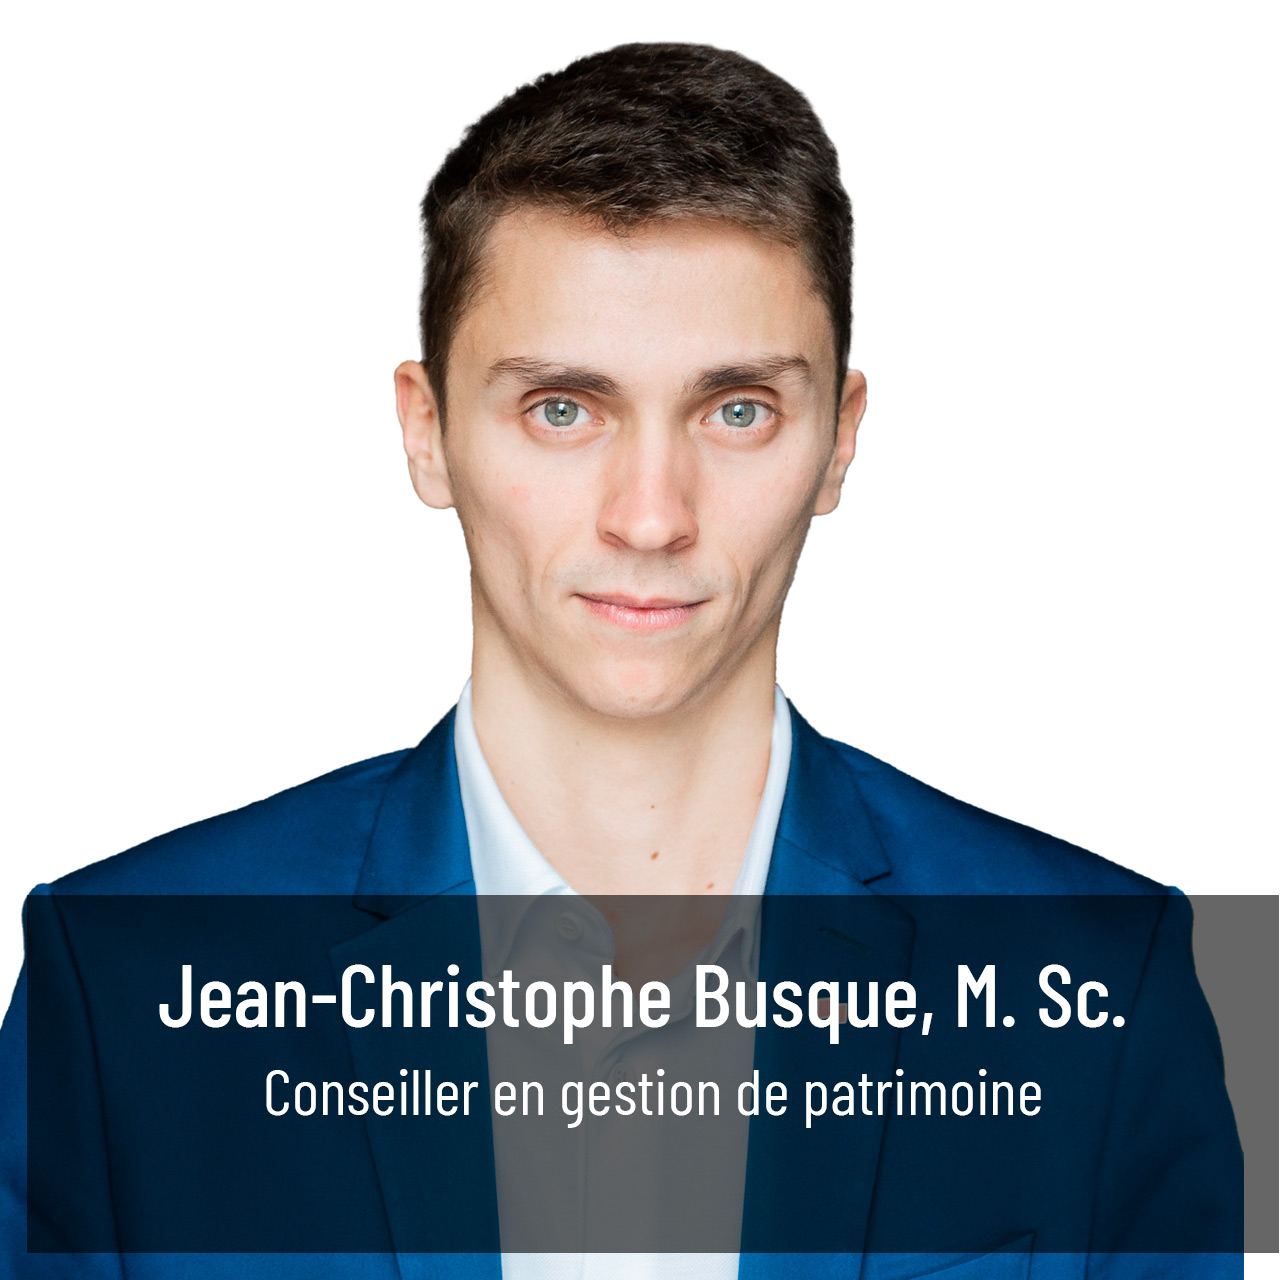 Jean-Christophe Busque, M. Sc.